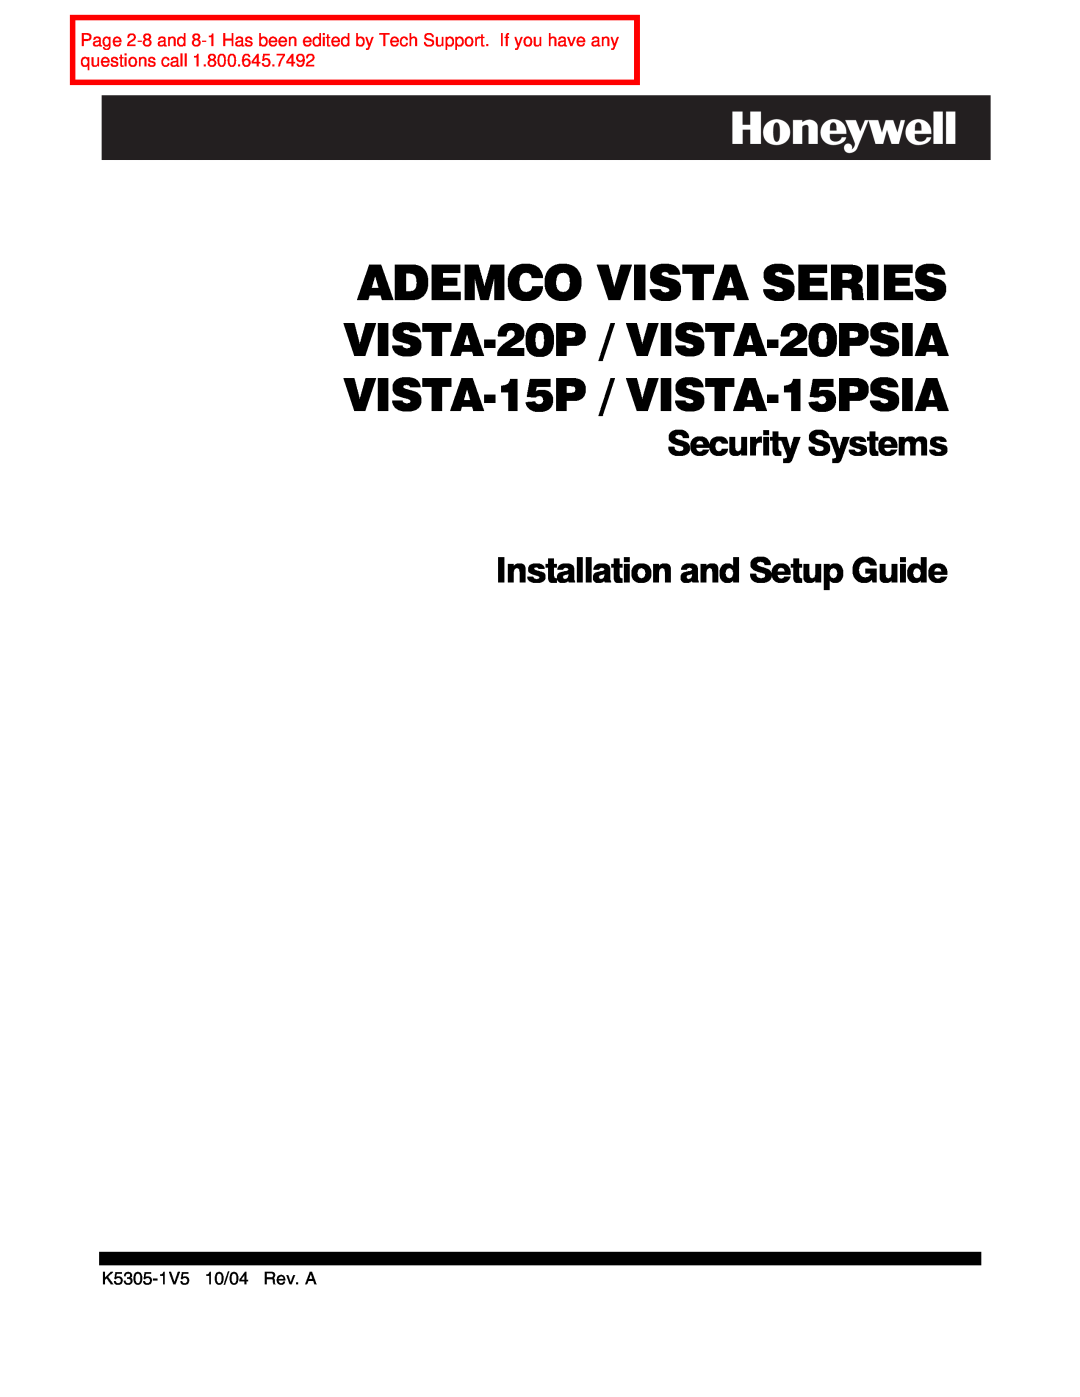 Honeywell VISTA 20P, VISTA-20PSIA, VISTA-15P, VISTA-15PSIA, K5305-1V5 setup guide Ademco Vista Series 